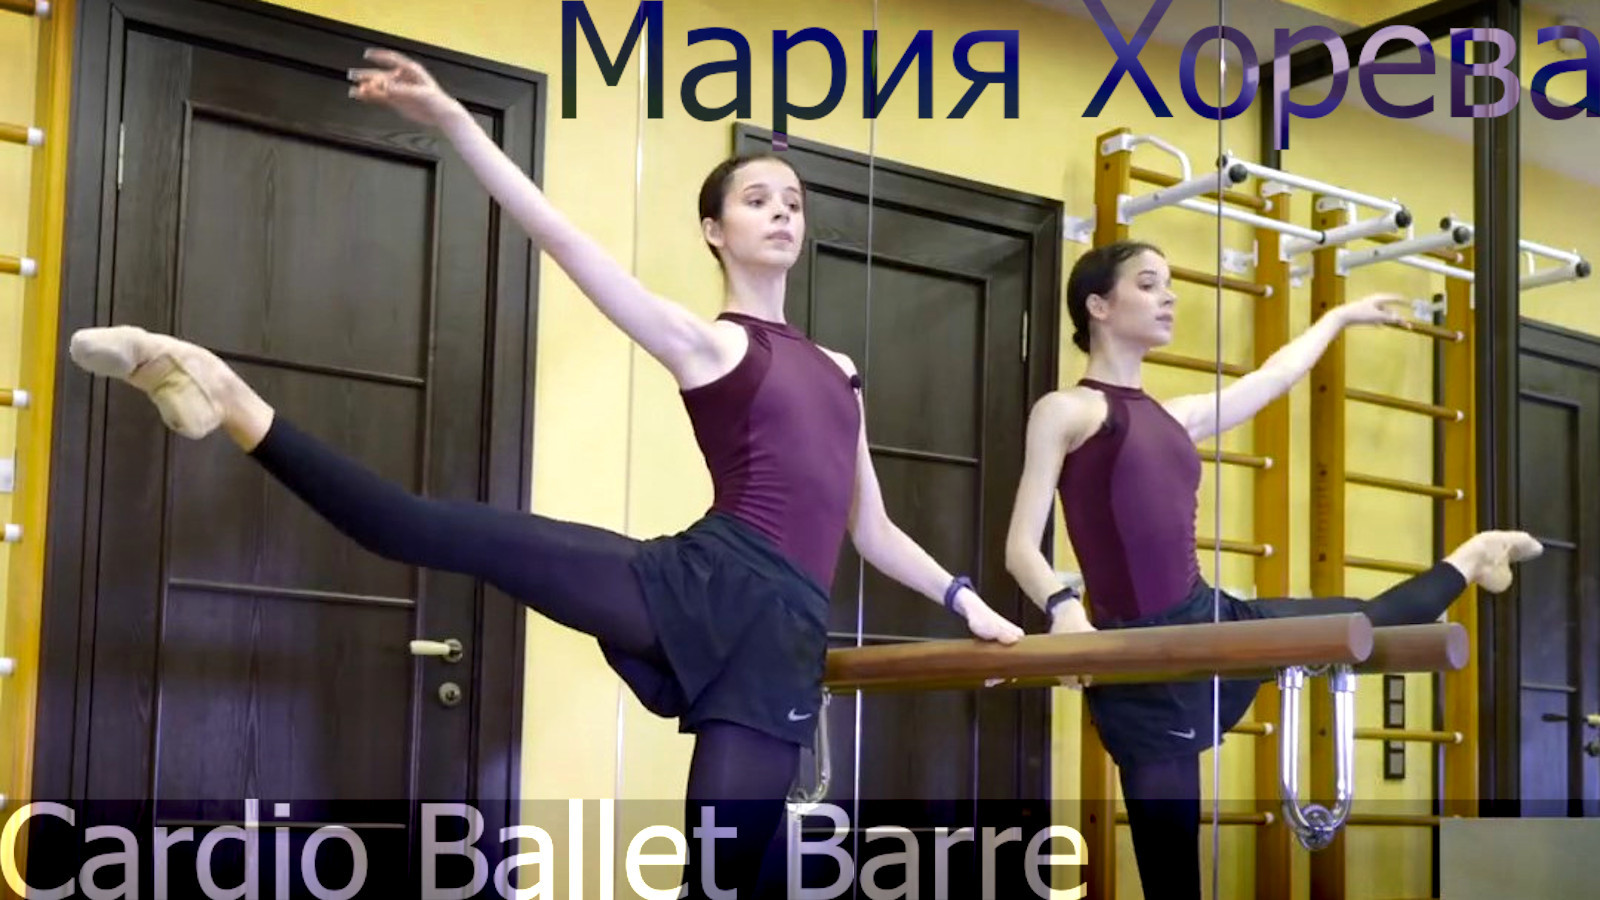 Maria Khoreva - Cardio Ballet Barre